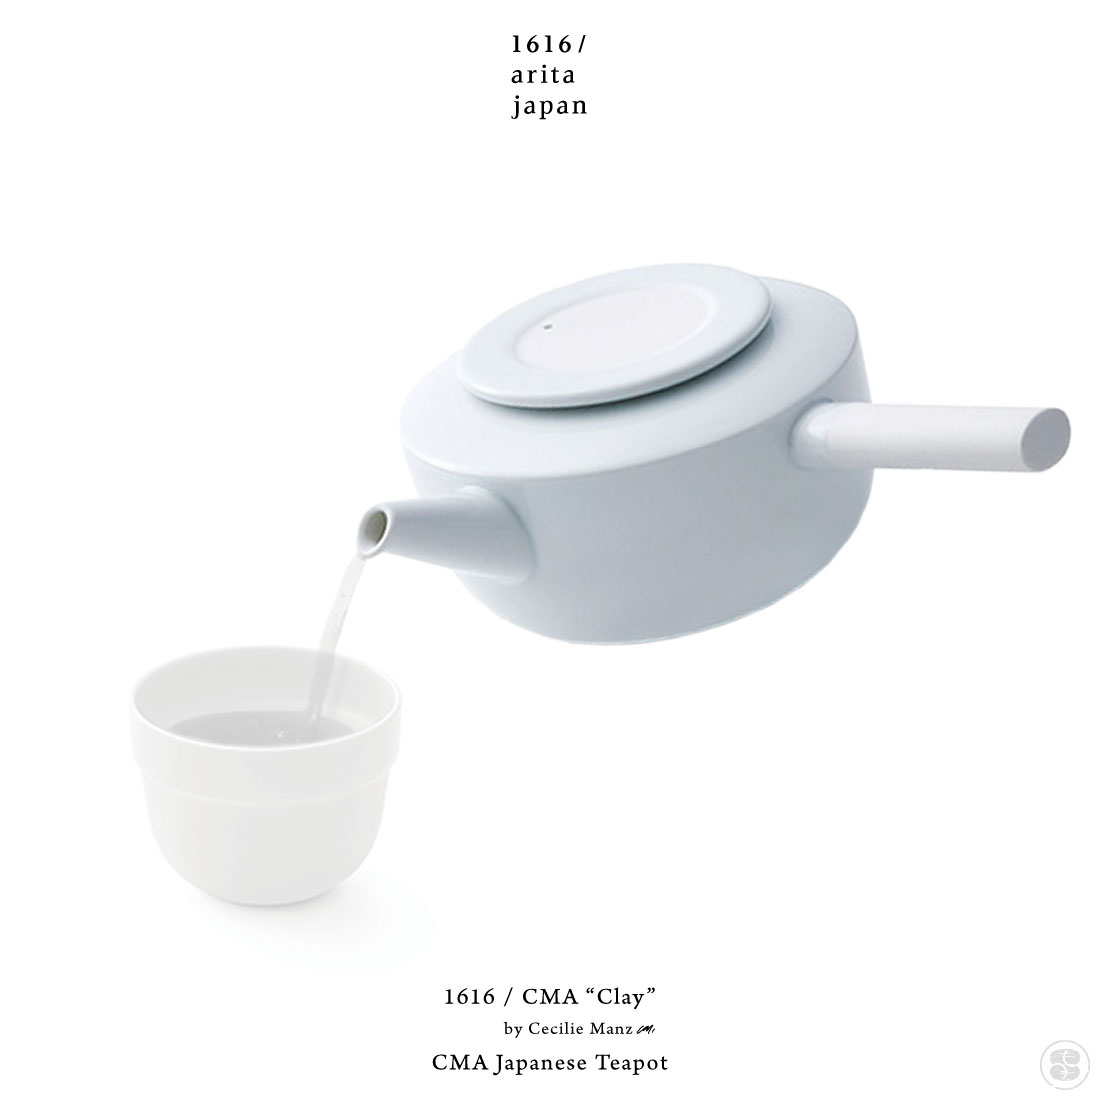 1616/arita japan/CMA “Clay”/CMA CMA Japanese Teapot/Cecilie Manz 